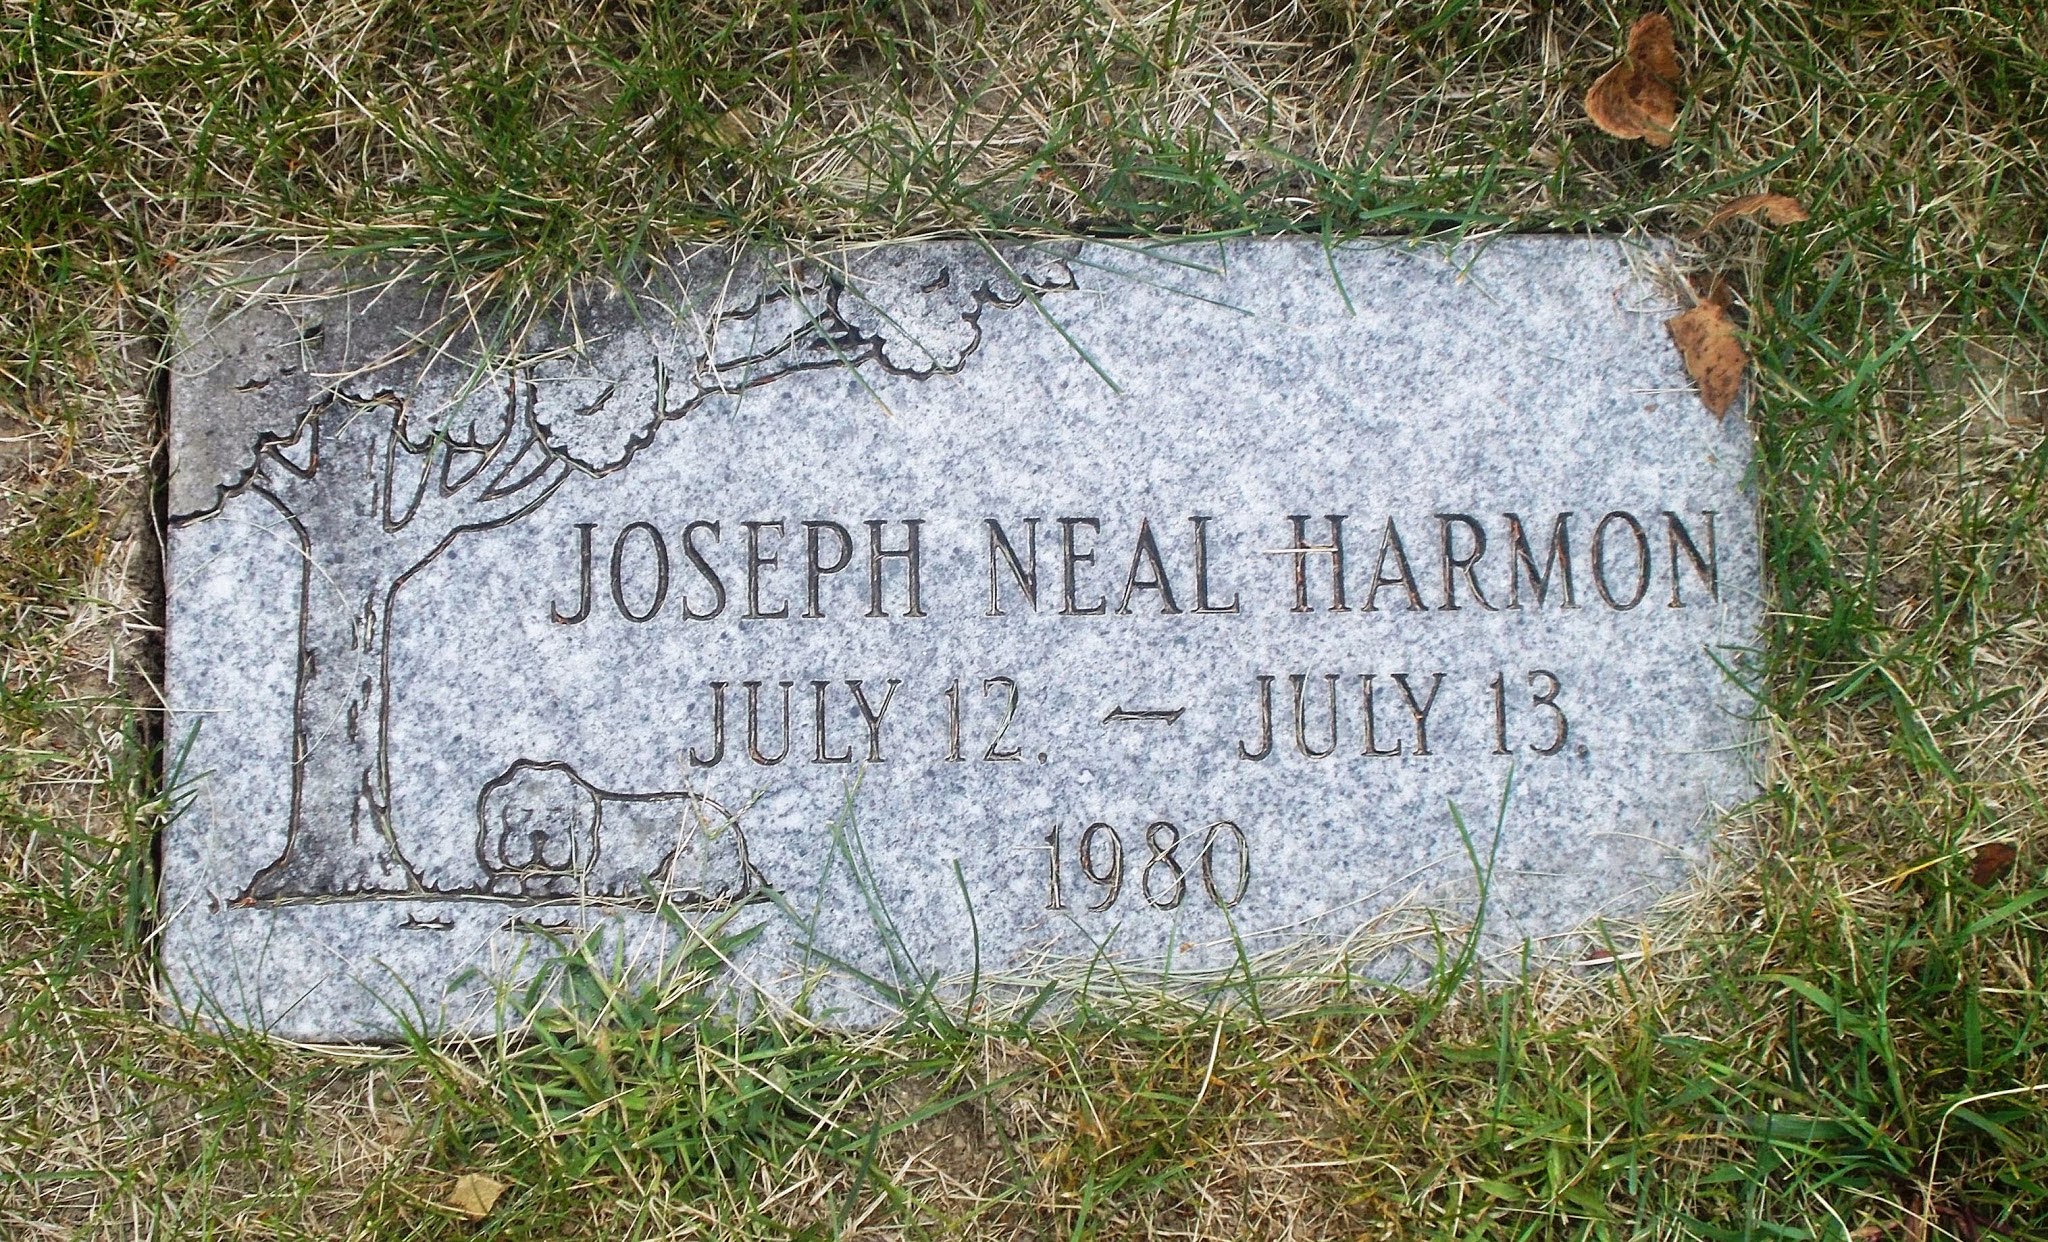 Joseph Neal Harmon